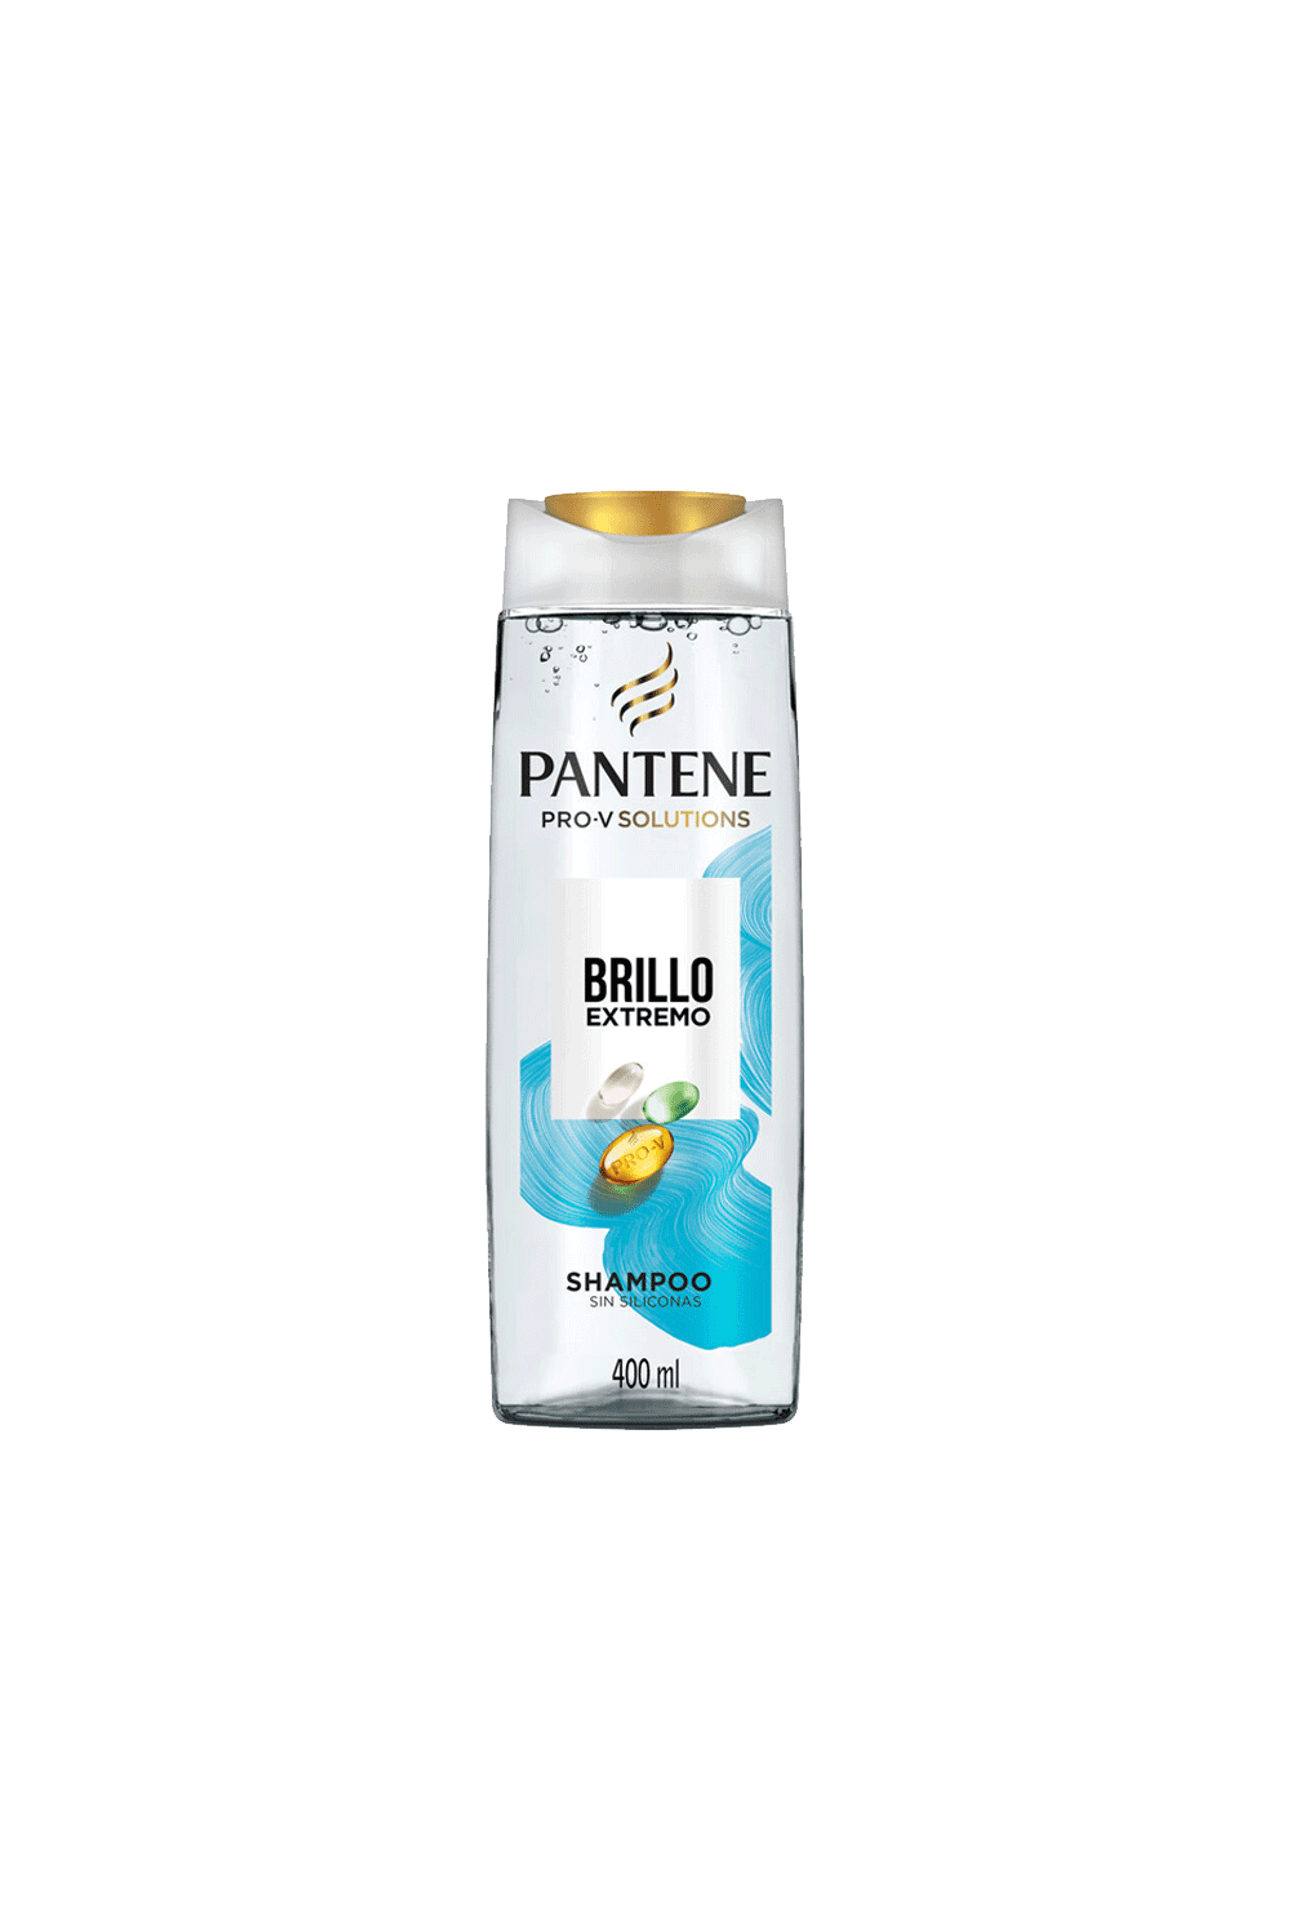 Pantene-Shampoo-Pantene-Pro-V-Brillo-Extremo-x-400ml-7500435212434_img1